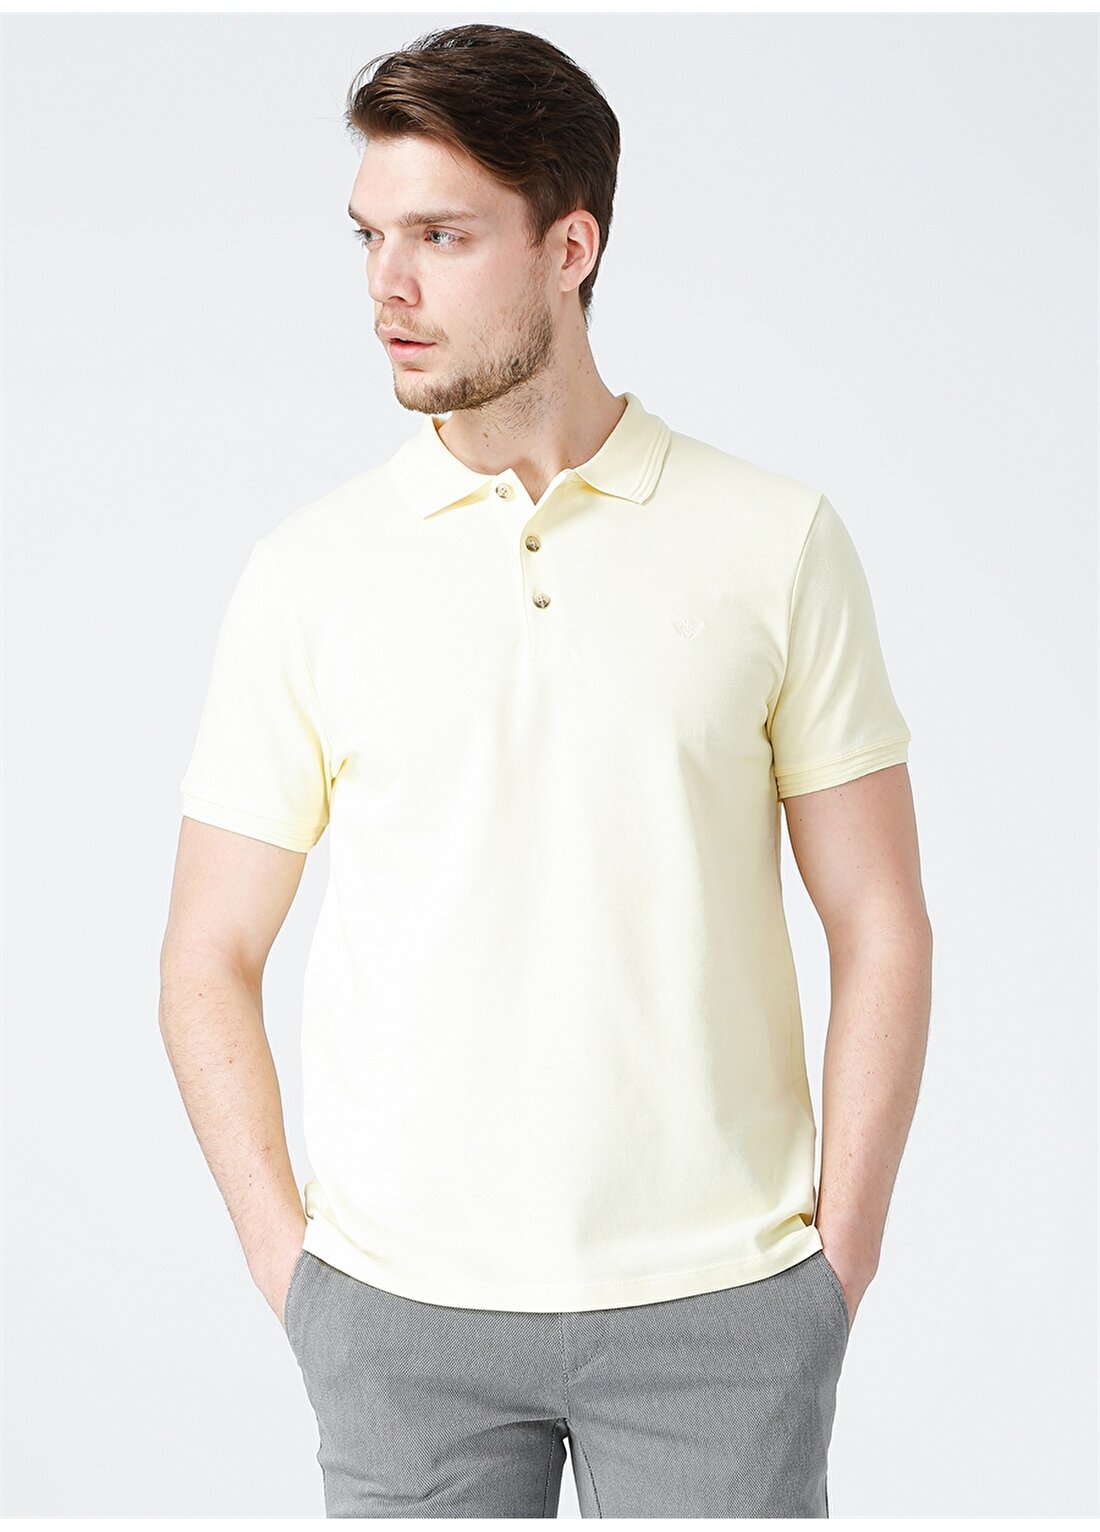 Beymen Business 4B4821200001 Düz Slim Fit Polo Yaka Sarı Düğmeli Erkek T-Shirt